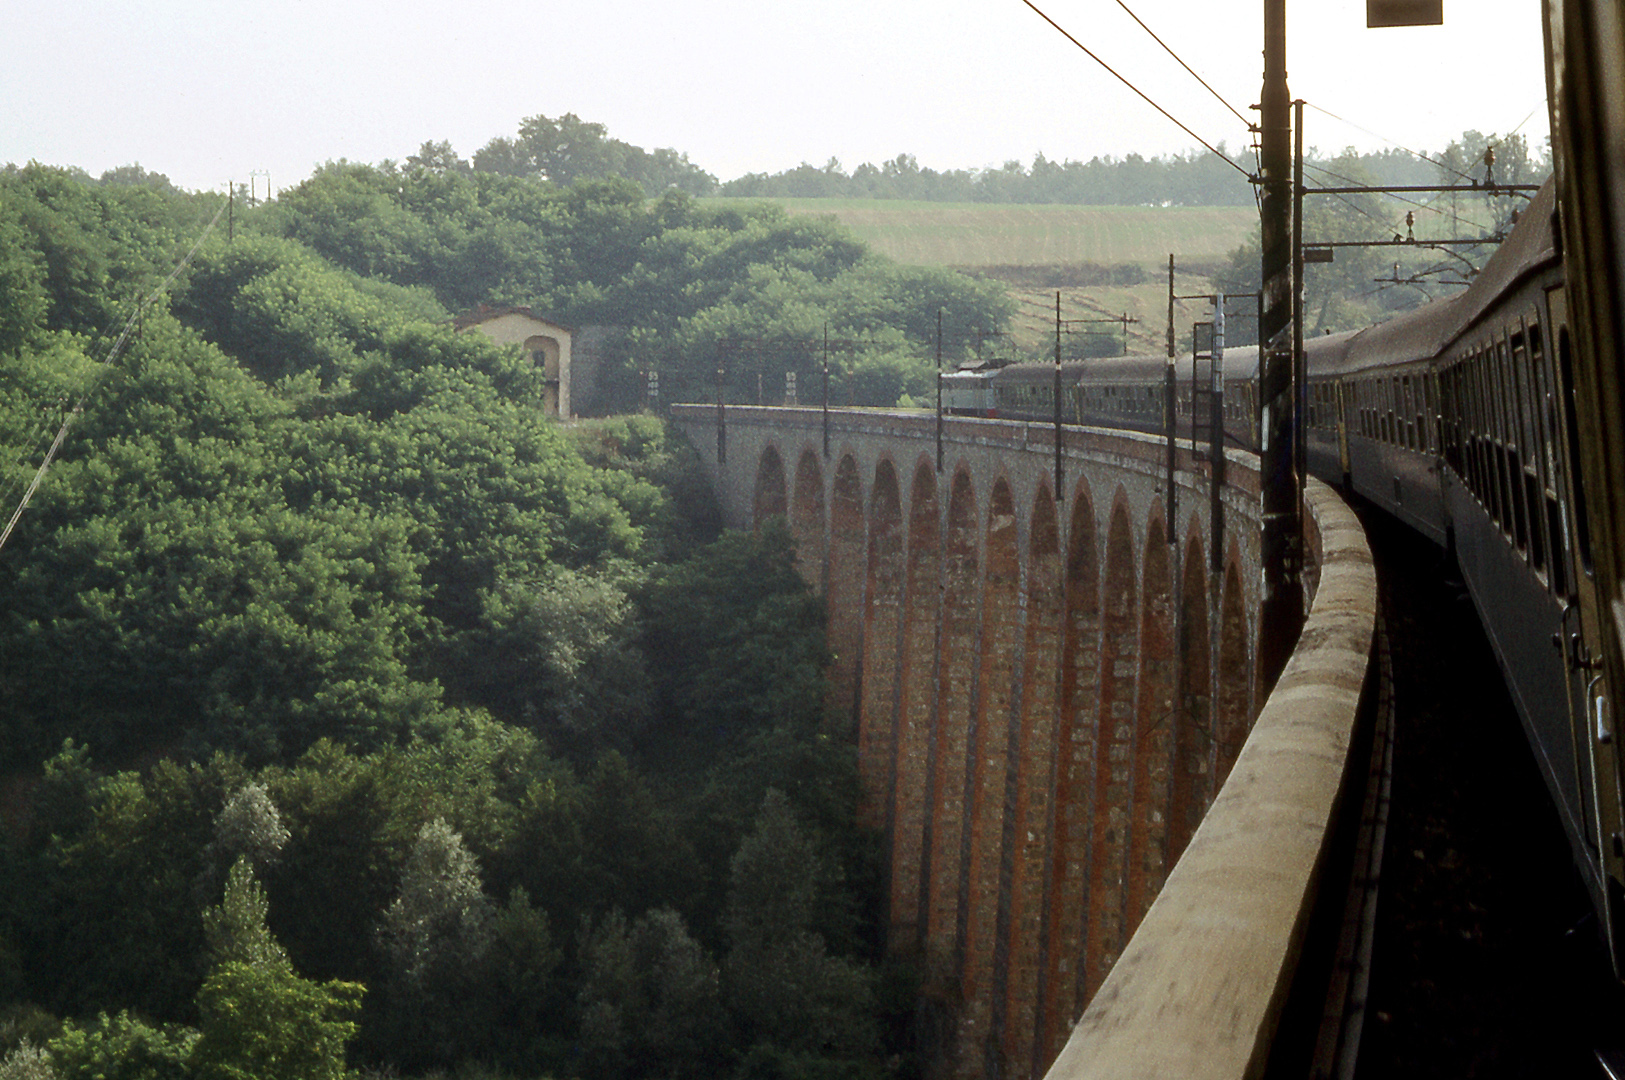 Spoorbrug in Toscane, Italië; Railway viaduct in Tuscany, Italy